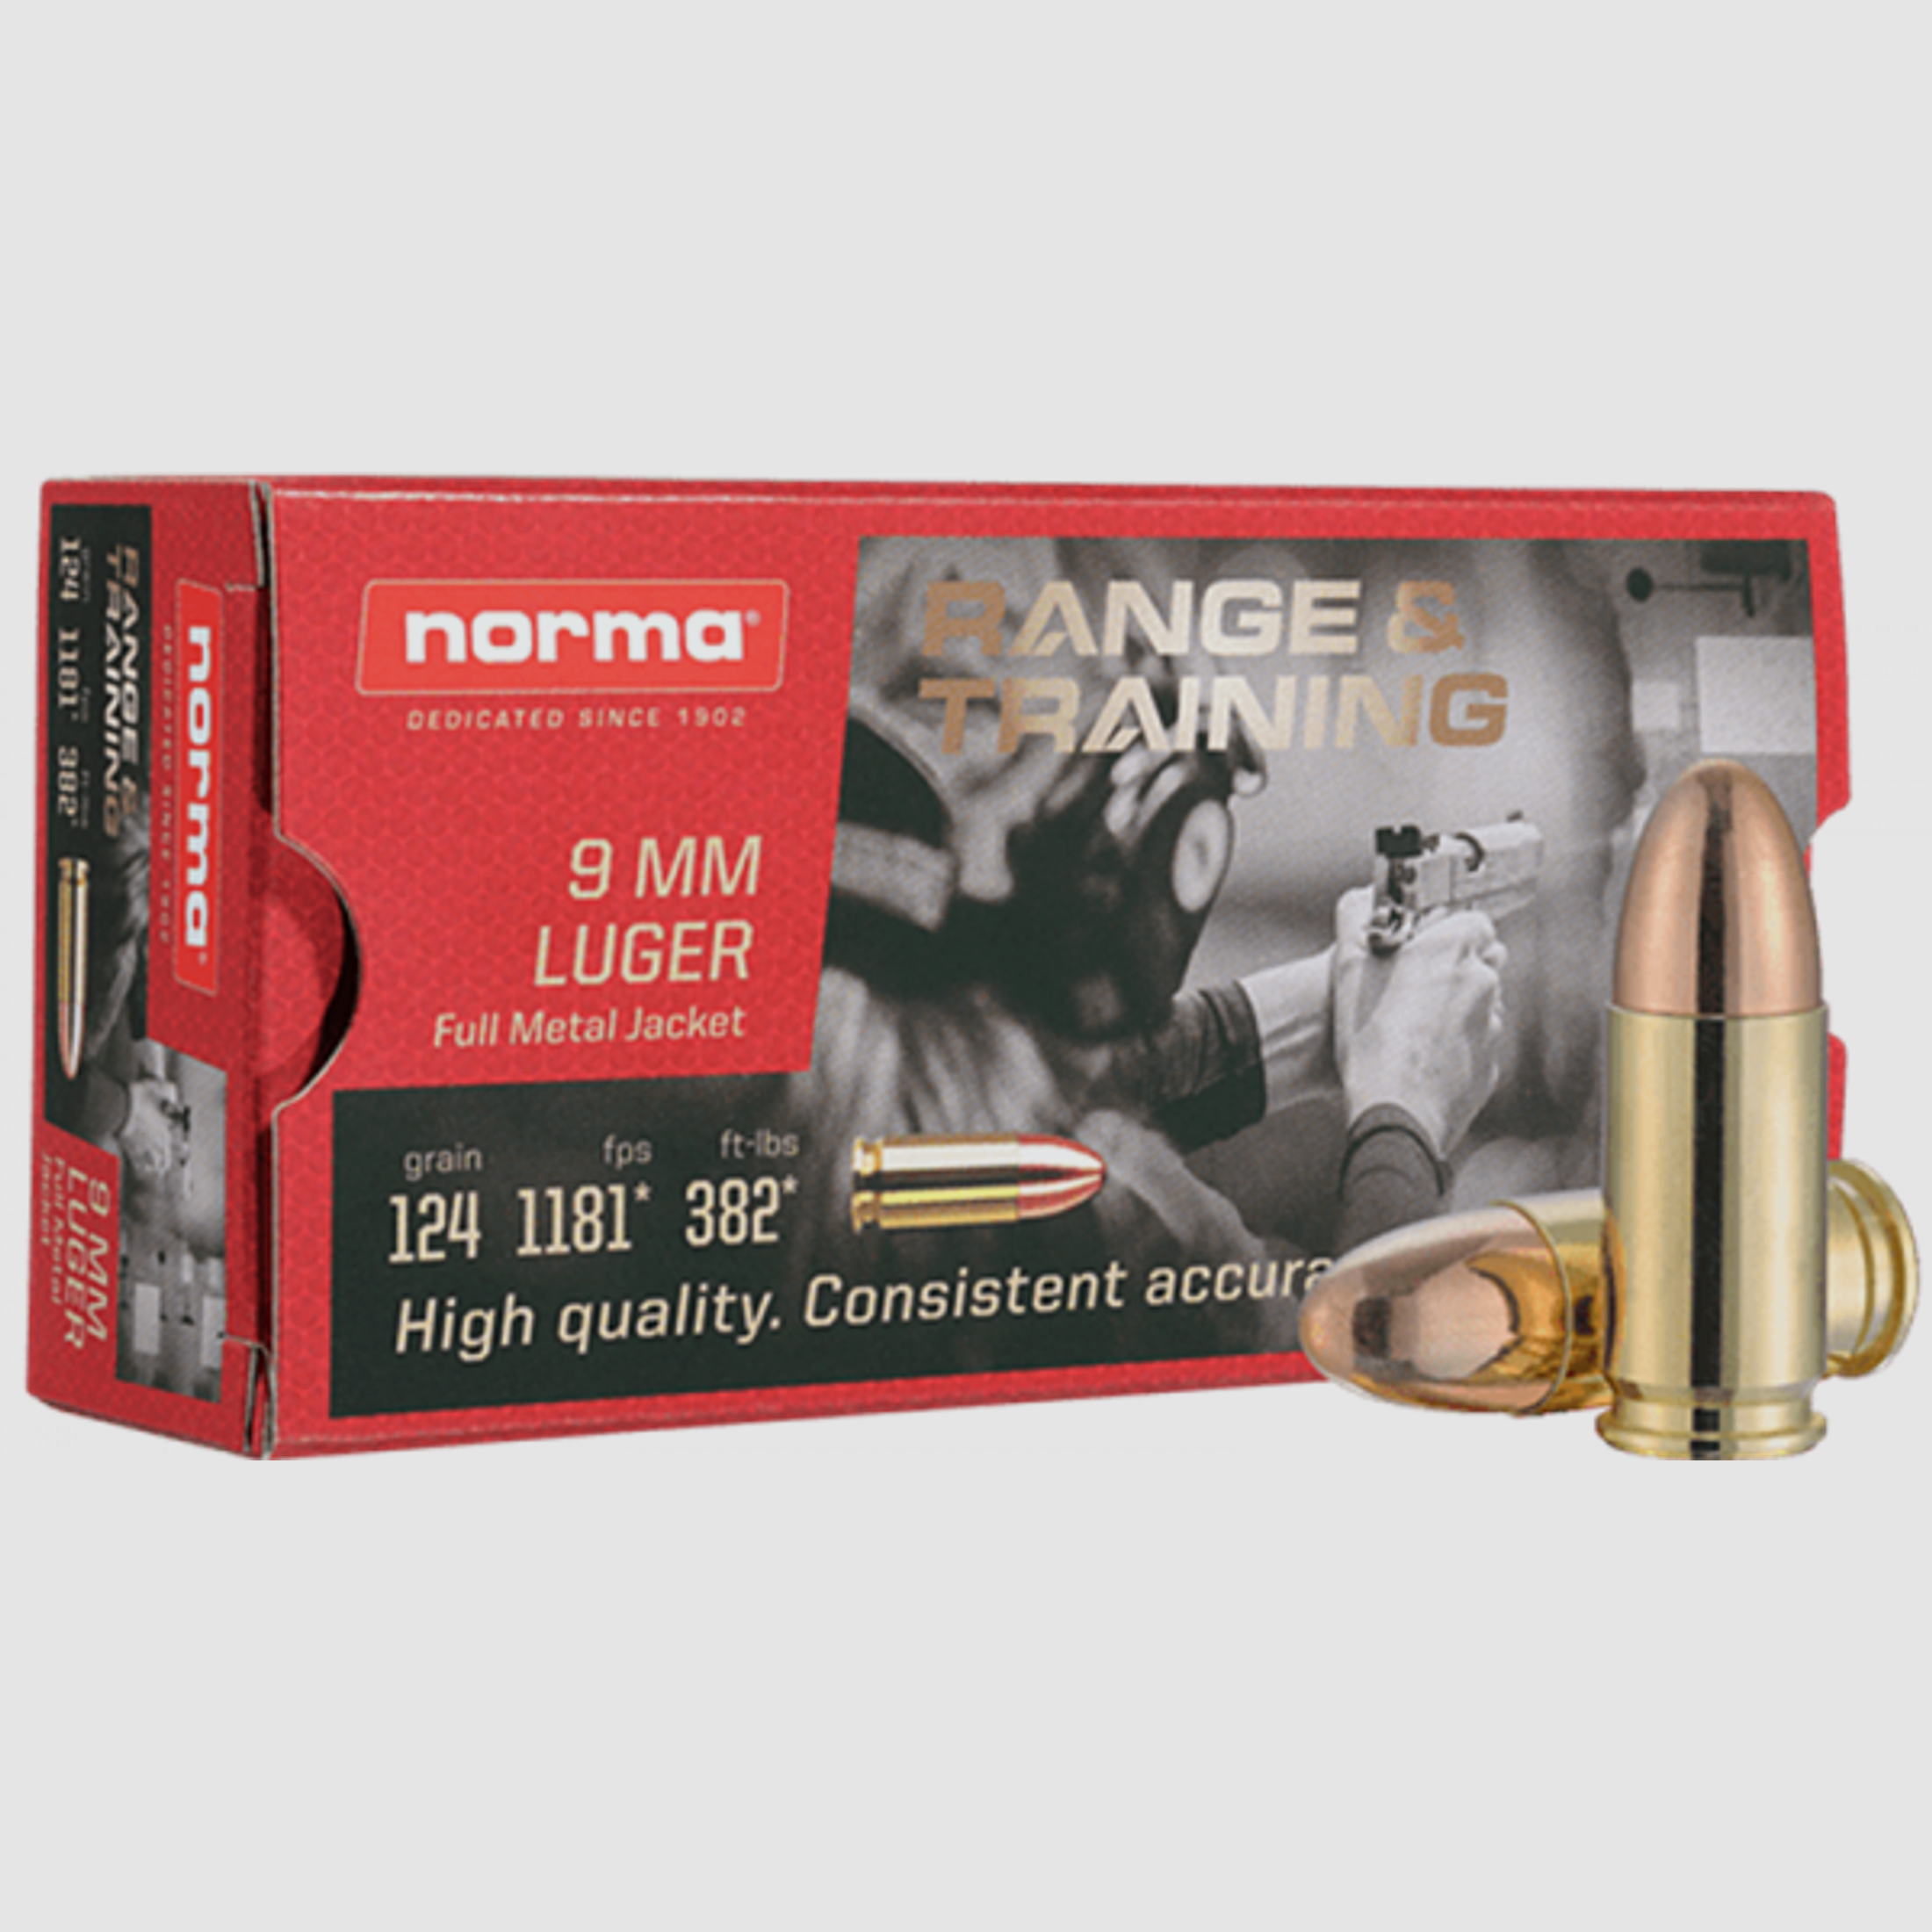 Norma Range Training 9mm Luger (9x19) FMJ 124 grs Pistolenpatronen